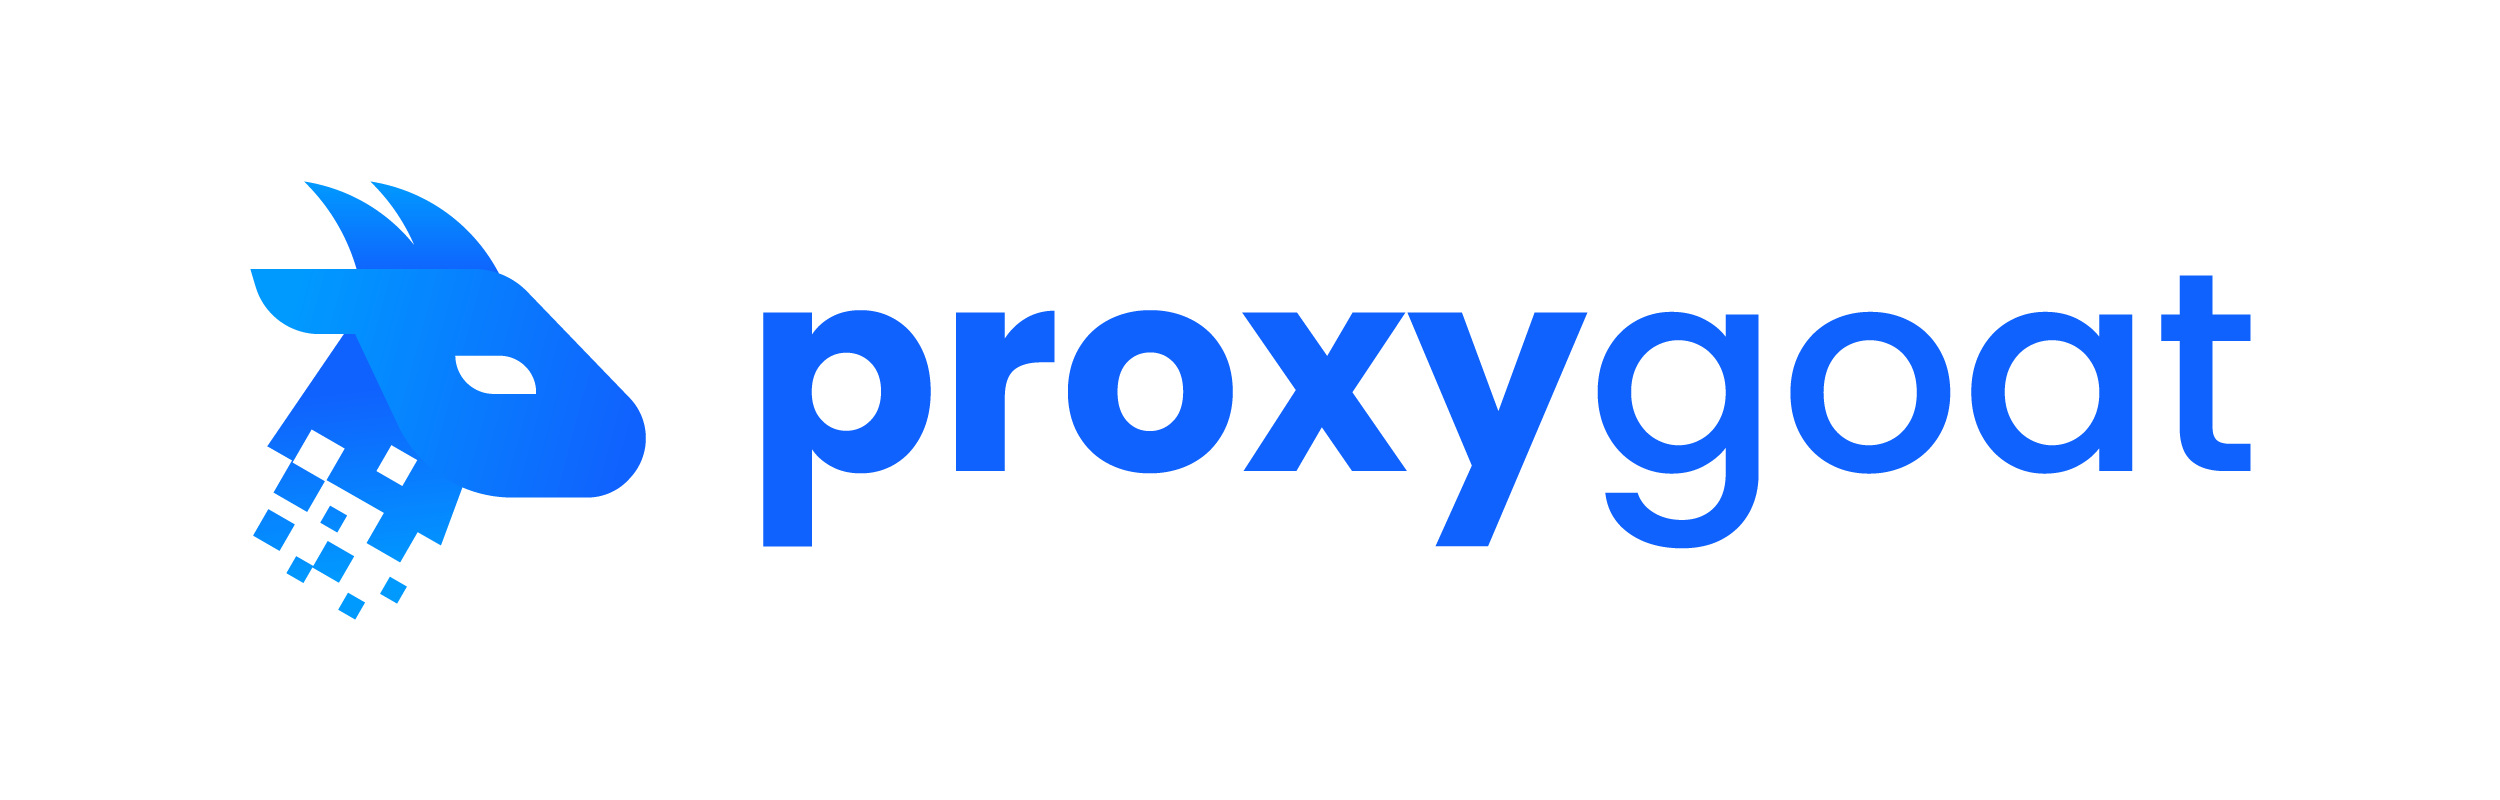 ProxyGoat